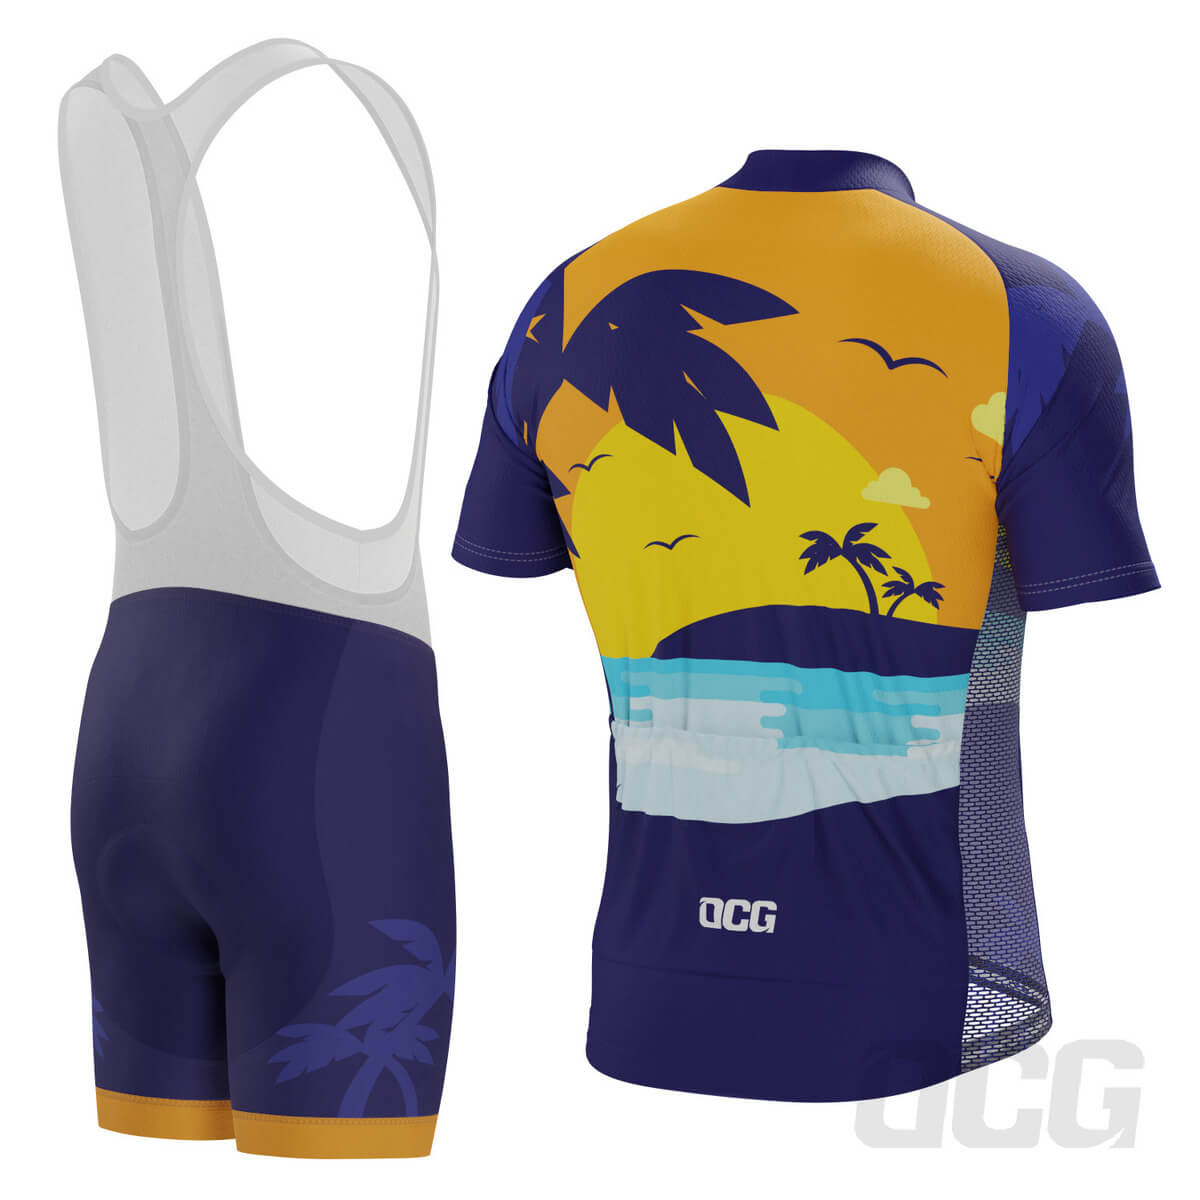 Men's Tropical Paradise Palm 2 Piece Cycling Kit